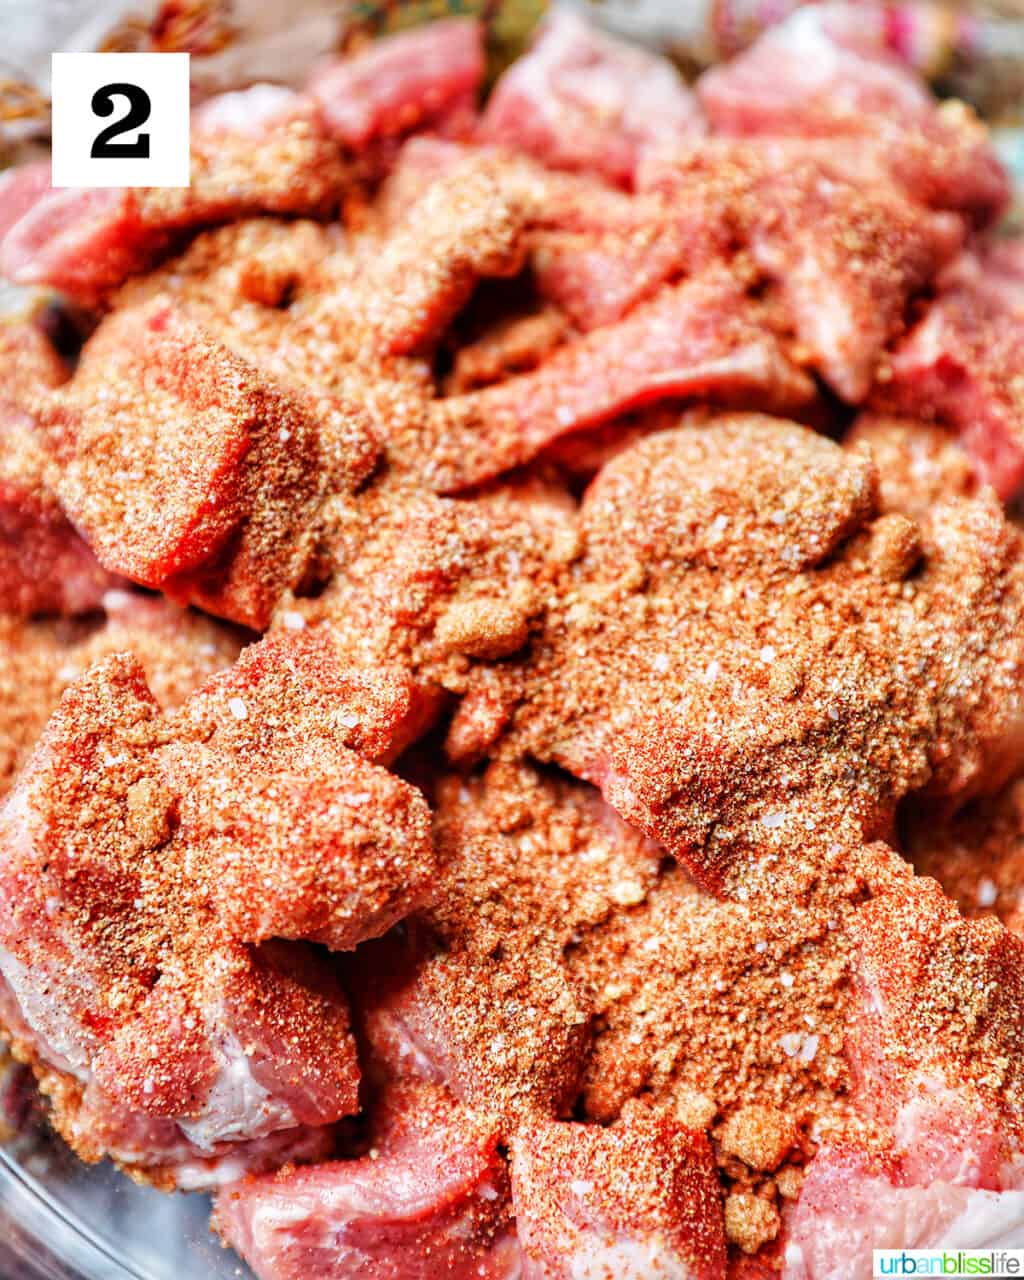 raw pork shoulder with seasoning.